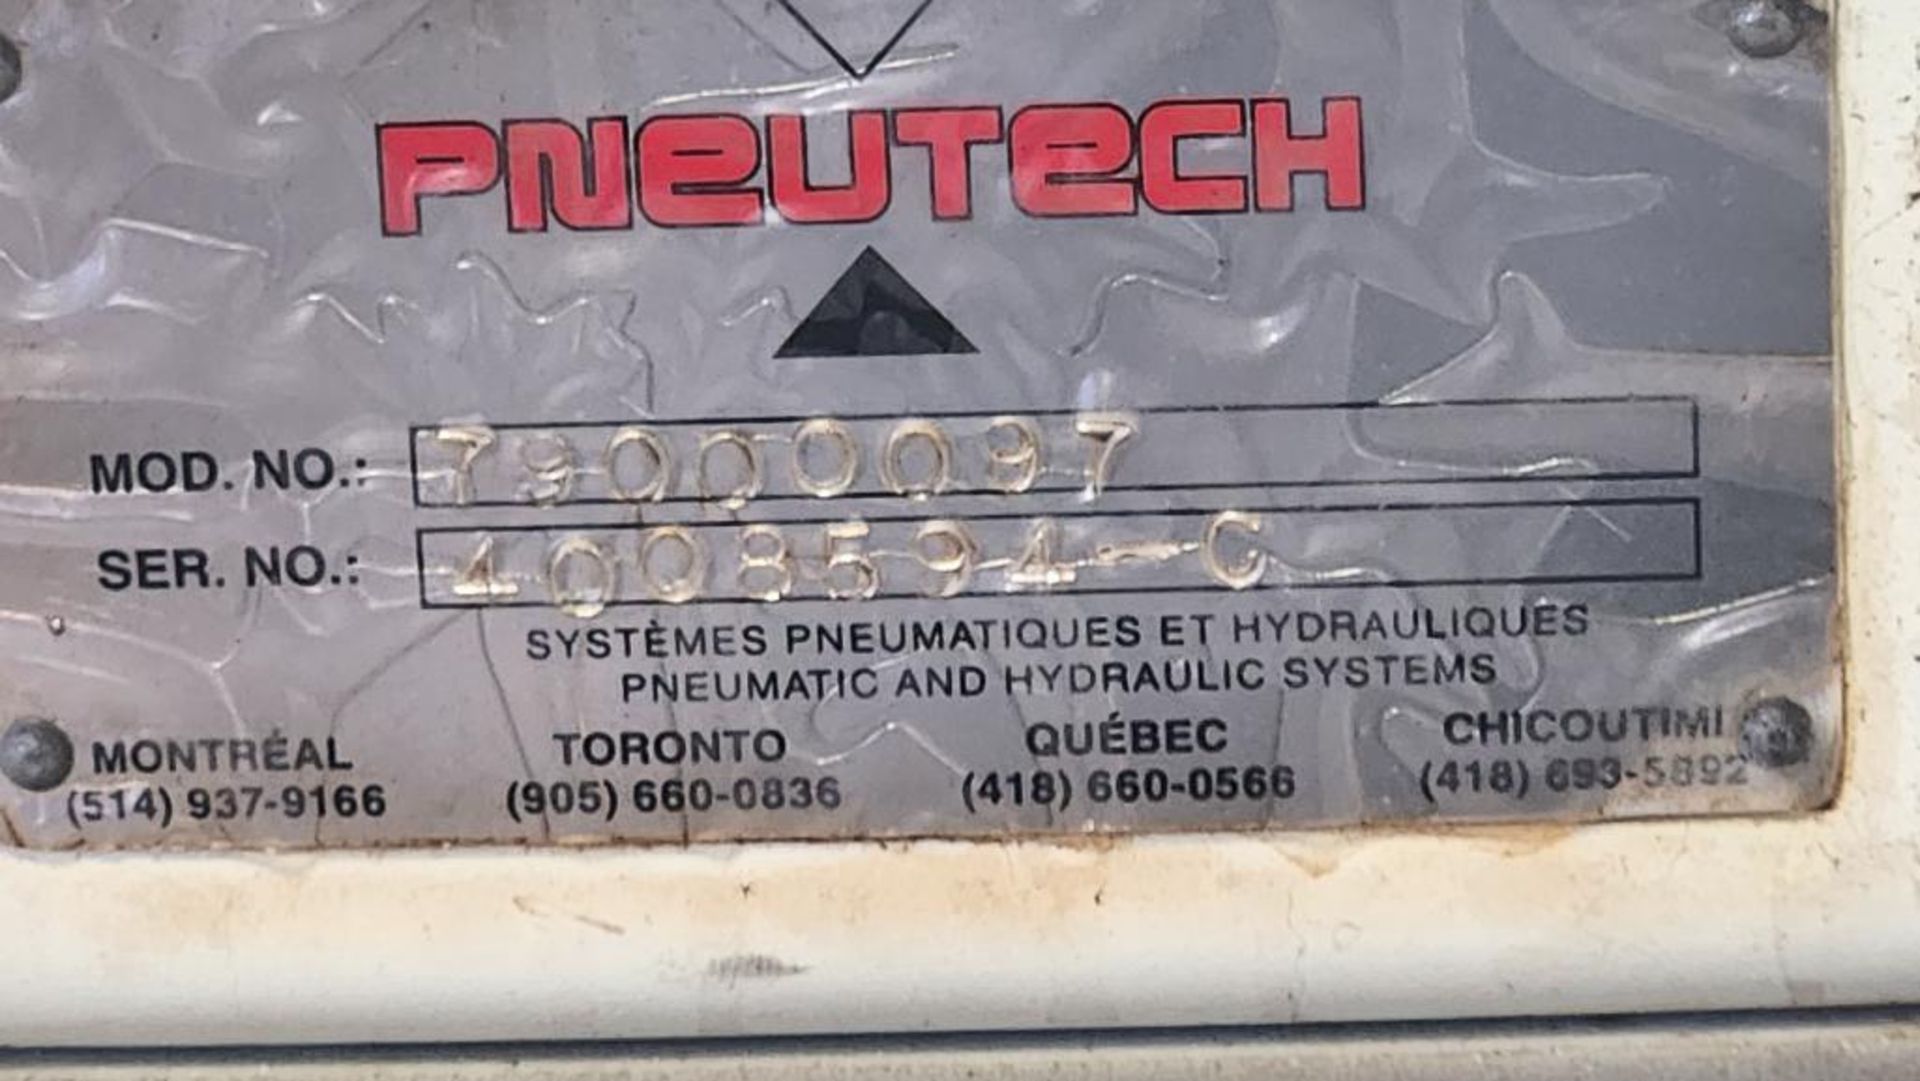 Pneutech Hydraulic Pump Unit, Model 79000097, S/N 4008594-C, 480 V, 3-Phase - Image 4 of 5